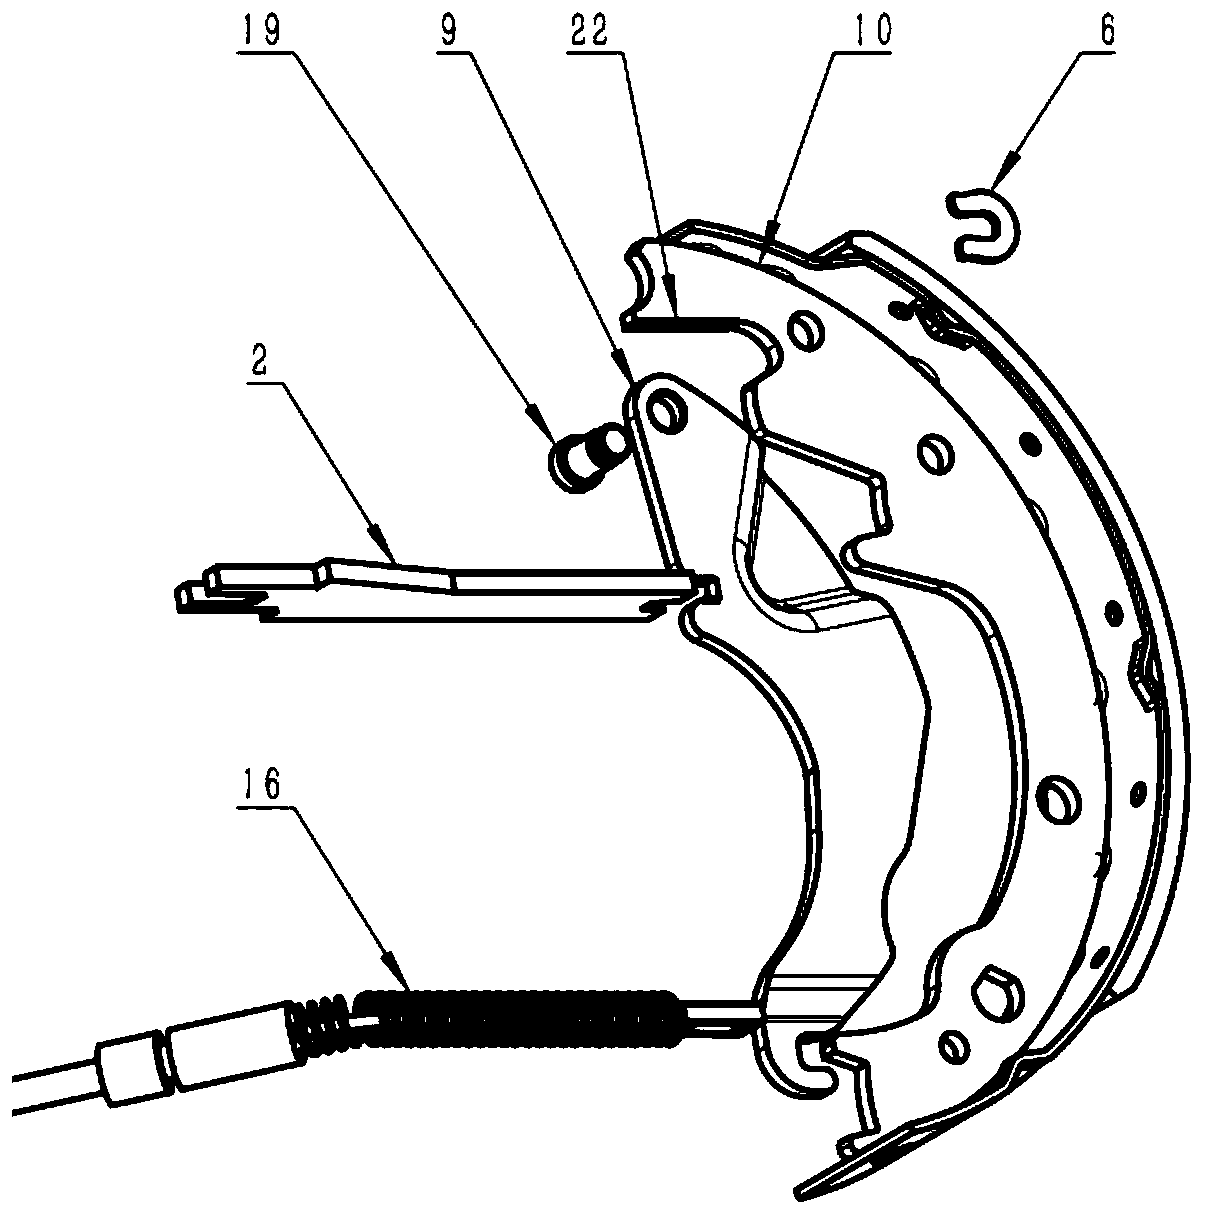 Self-adjustable servo type service drum brake with parking function